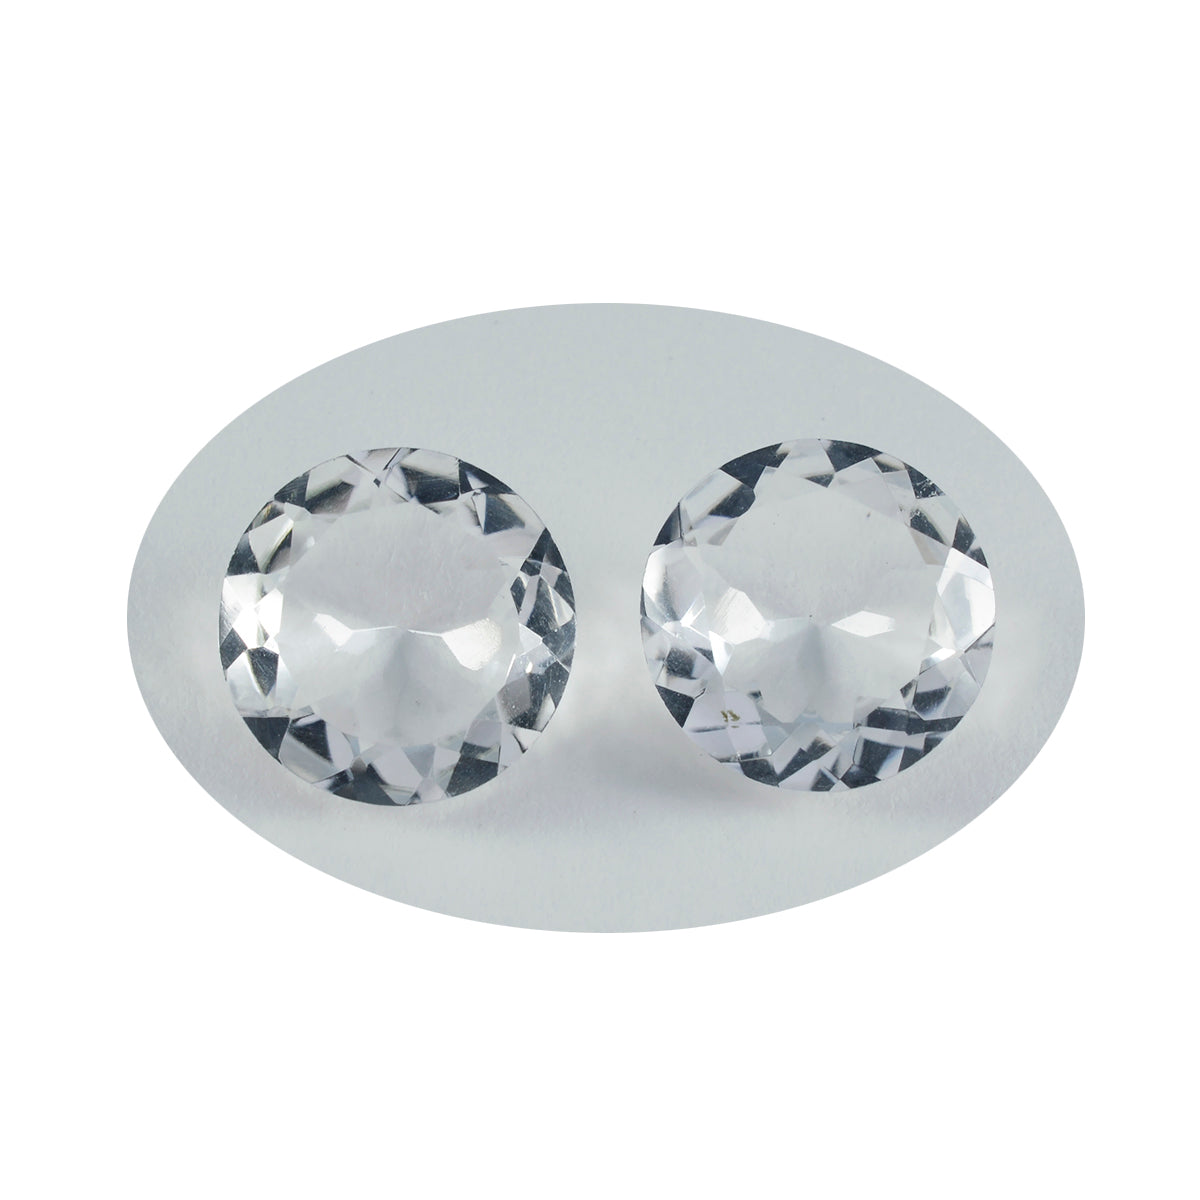 Riyogems 1PC White Crystal Quartz Faceted 15x15 mm Round Shape beautiful Quality Gemstone